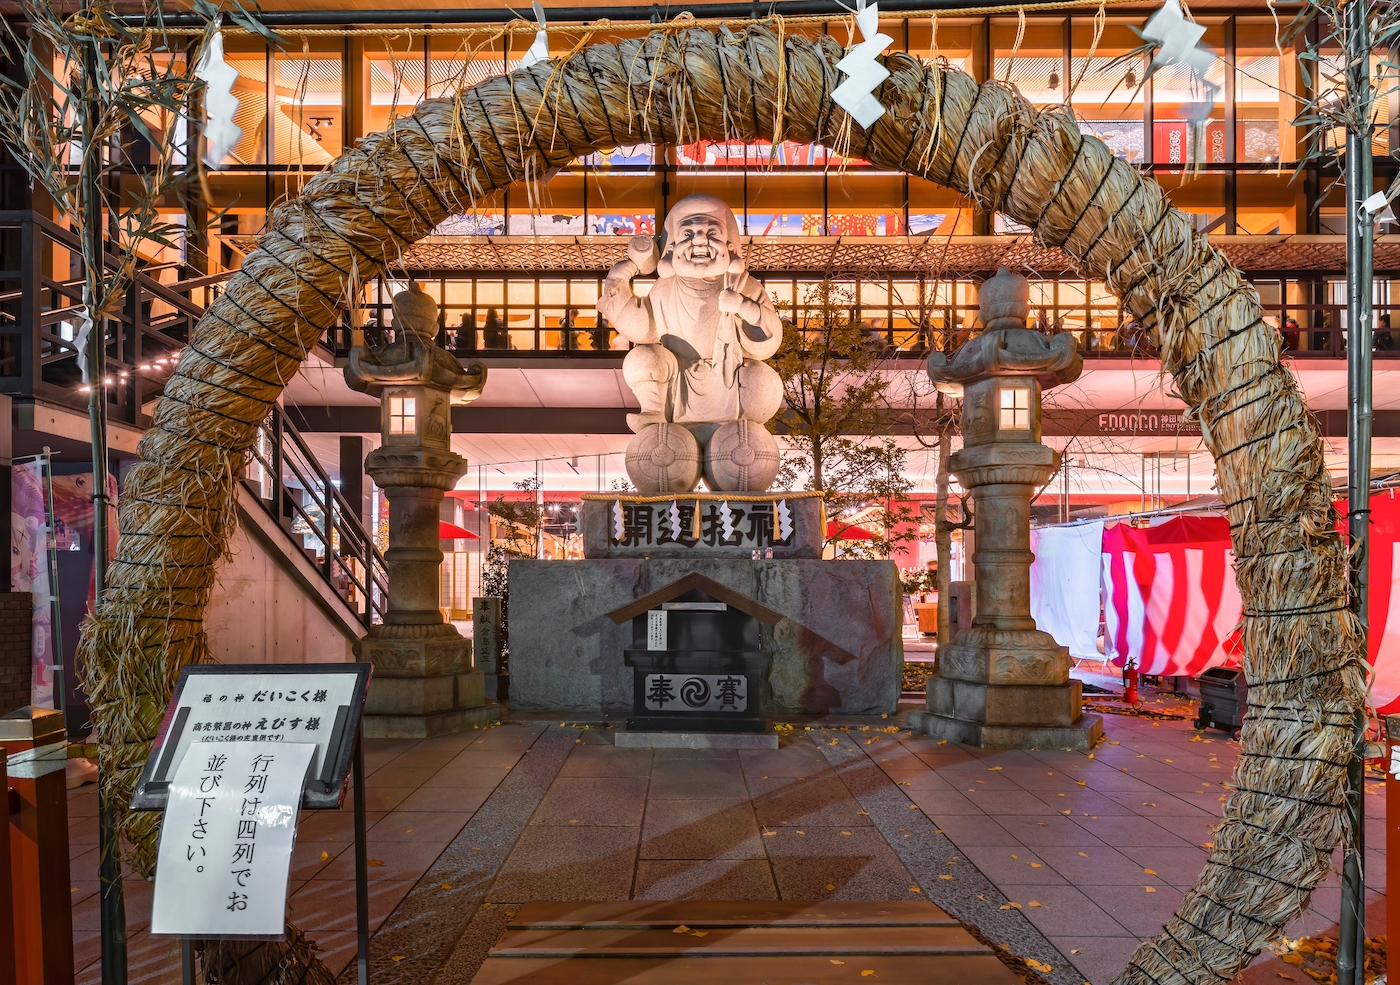 Tokyo, Japan - December 15, 2021: Stone statue of the lucky god Daikokuten illuminated at night during the purification ritual chinowa-kuguri using a circular braided straw gate in the Kanda Myojin shrine.